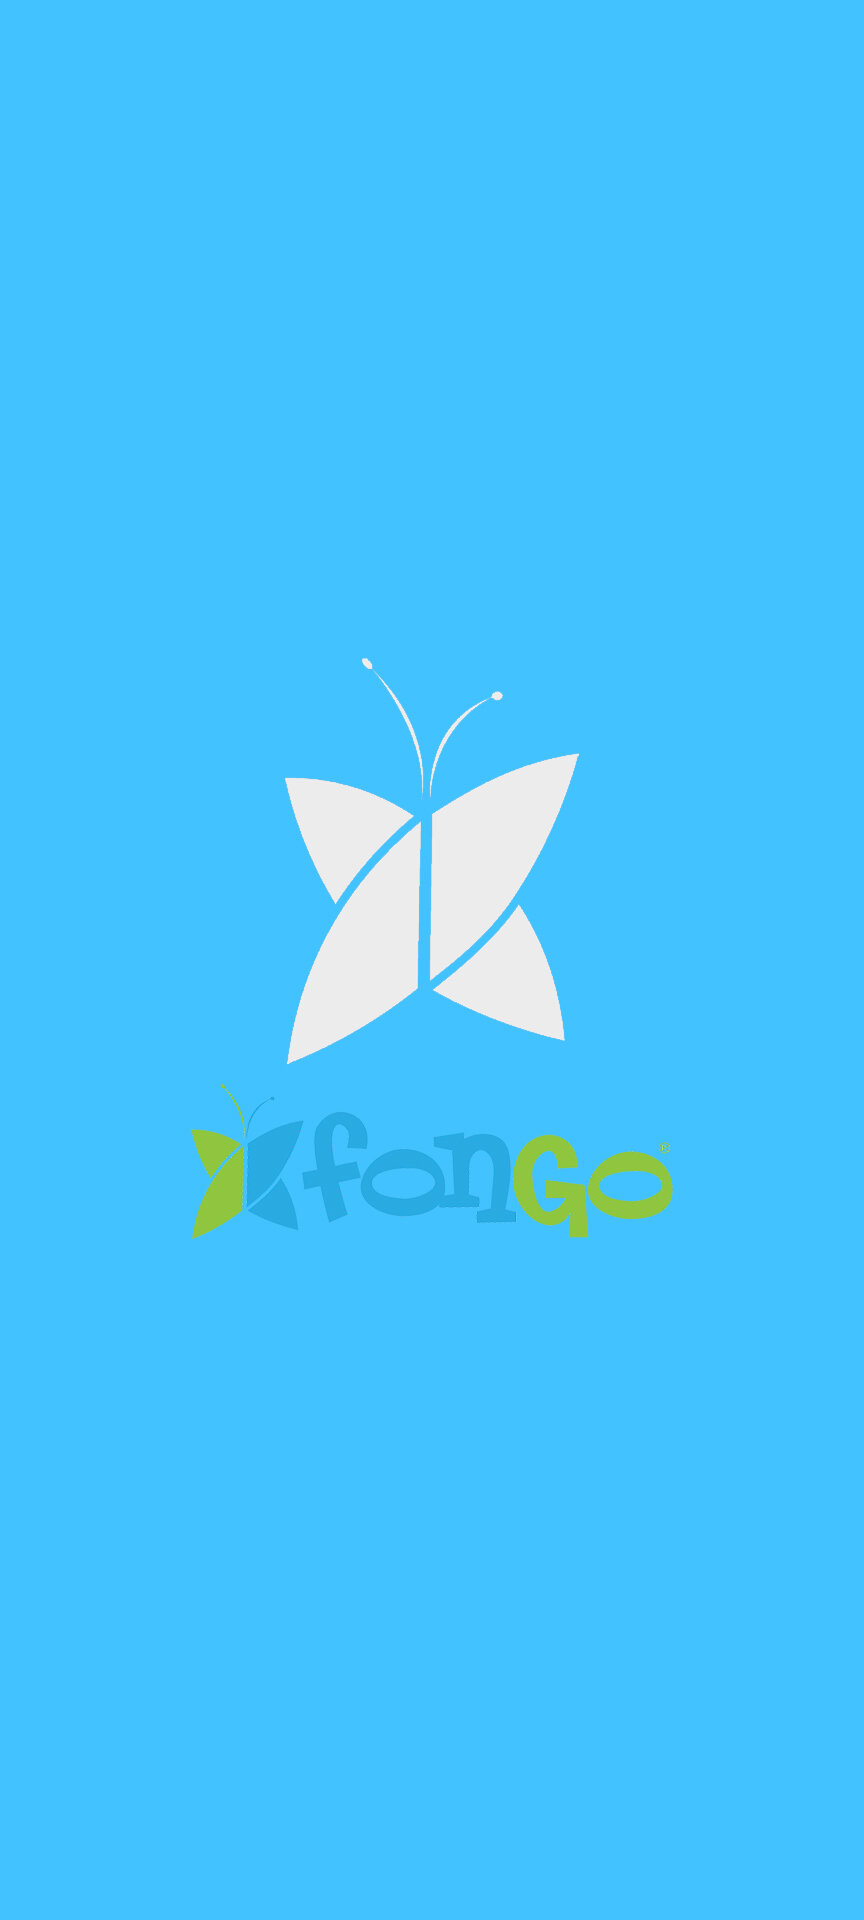 FONGO_apps_voyage.jpg